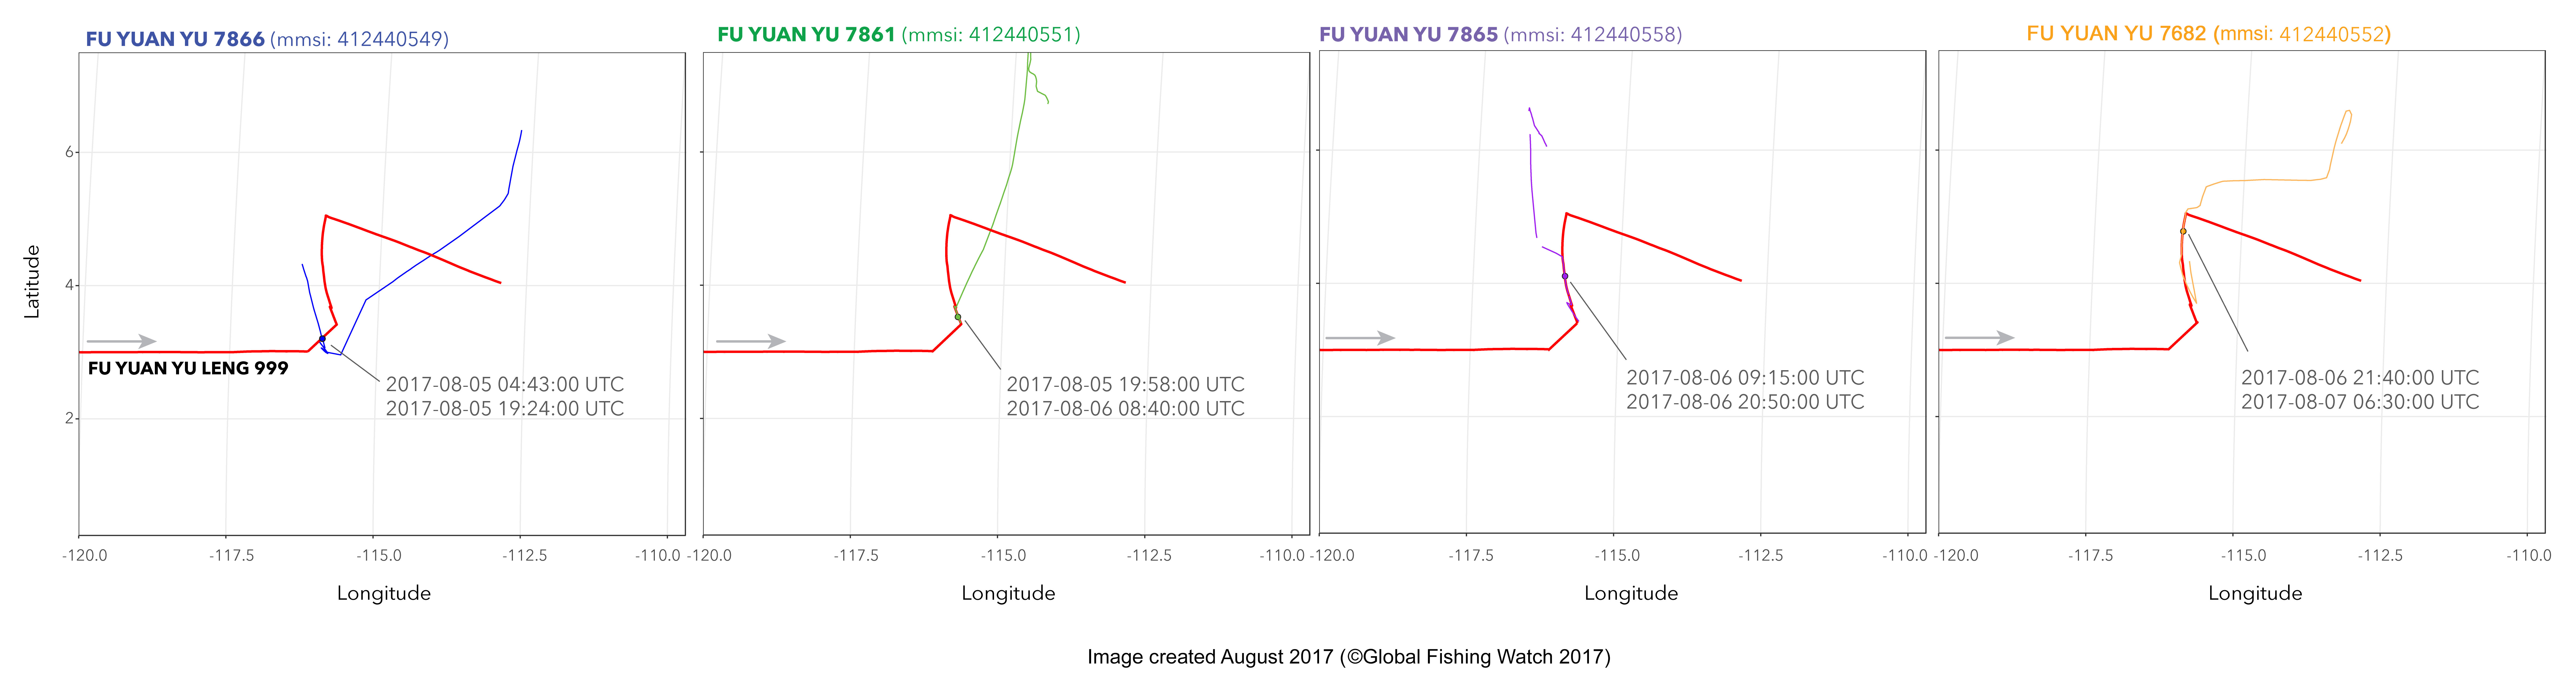 AIS track of the Fu Yuan Yu